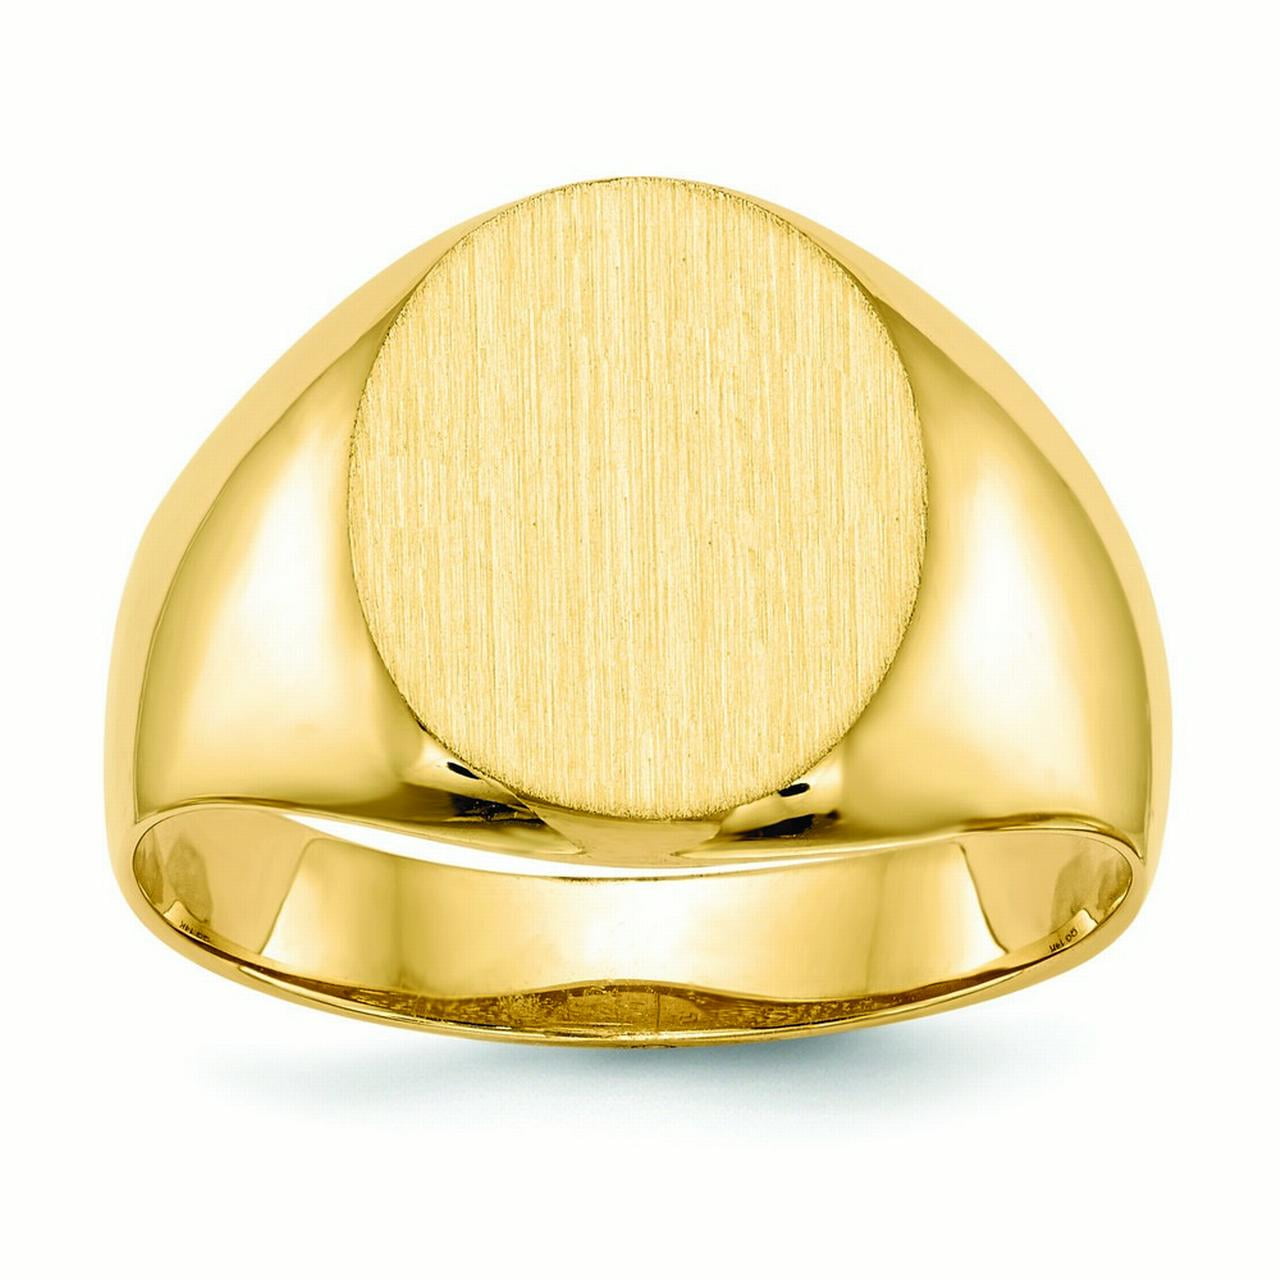 JewelryWeb - 14k Yellow Gold Mens Signet Ring - 5.5 Grams - Size 10 ...